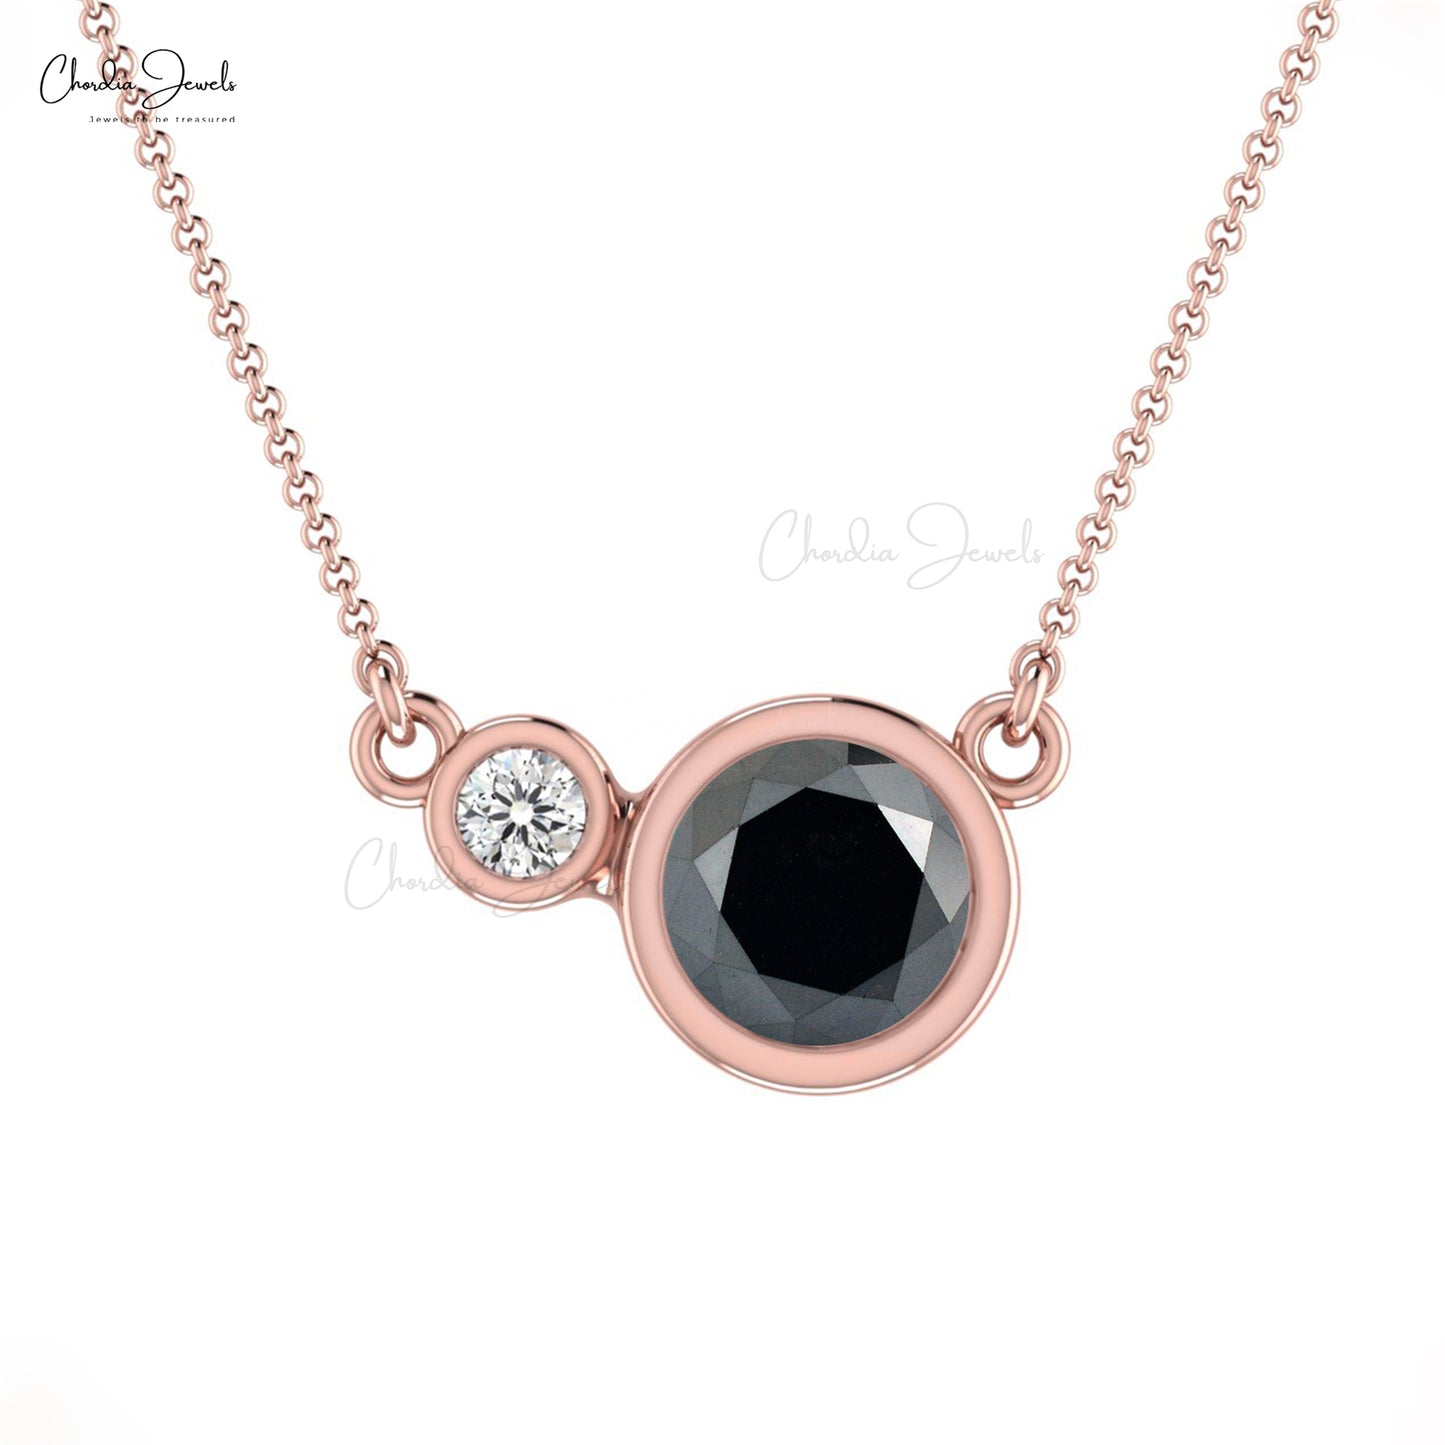 Black Diamond Chain Necklace | 64Facets Fine Jewelry